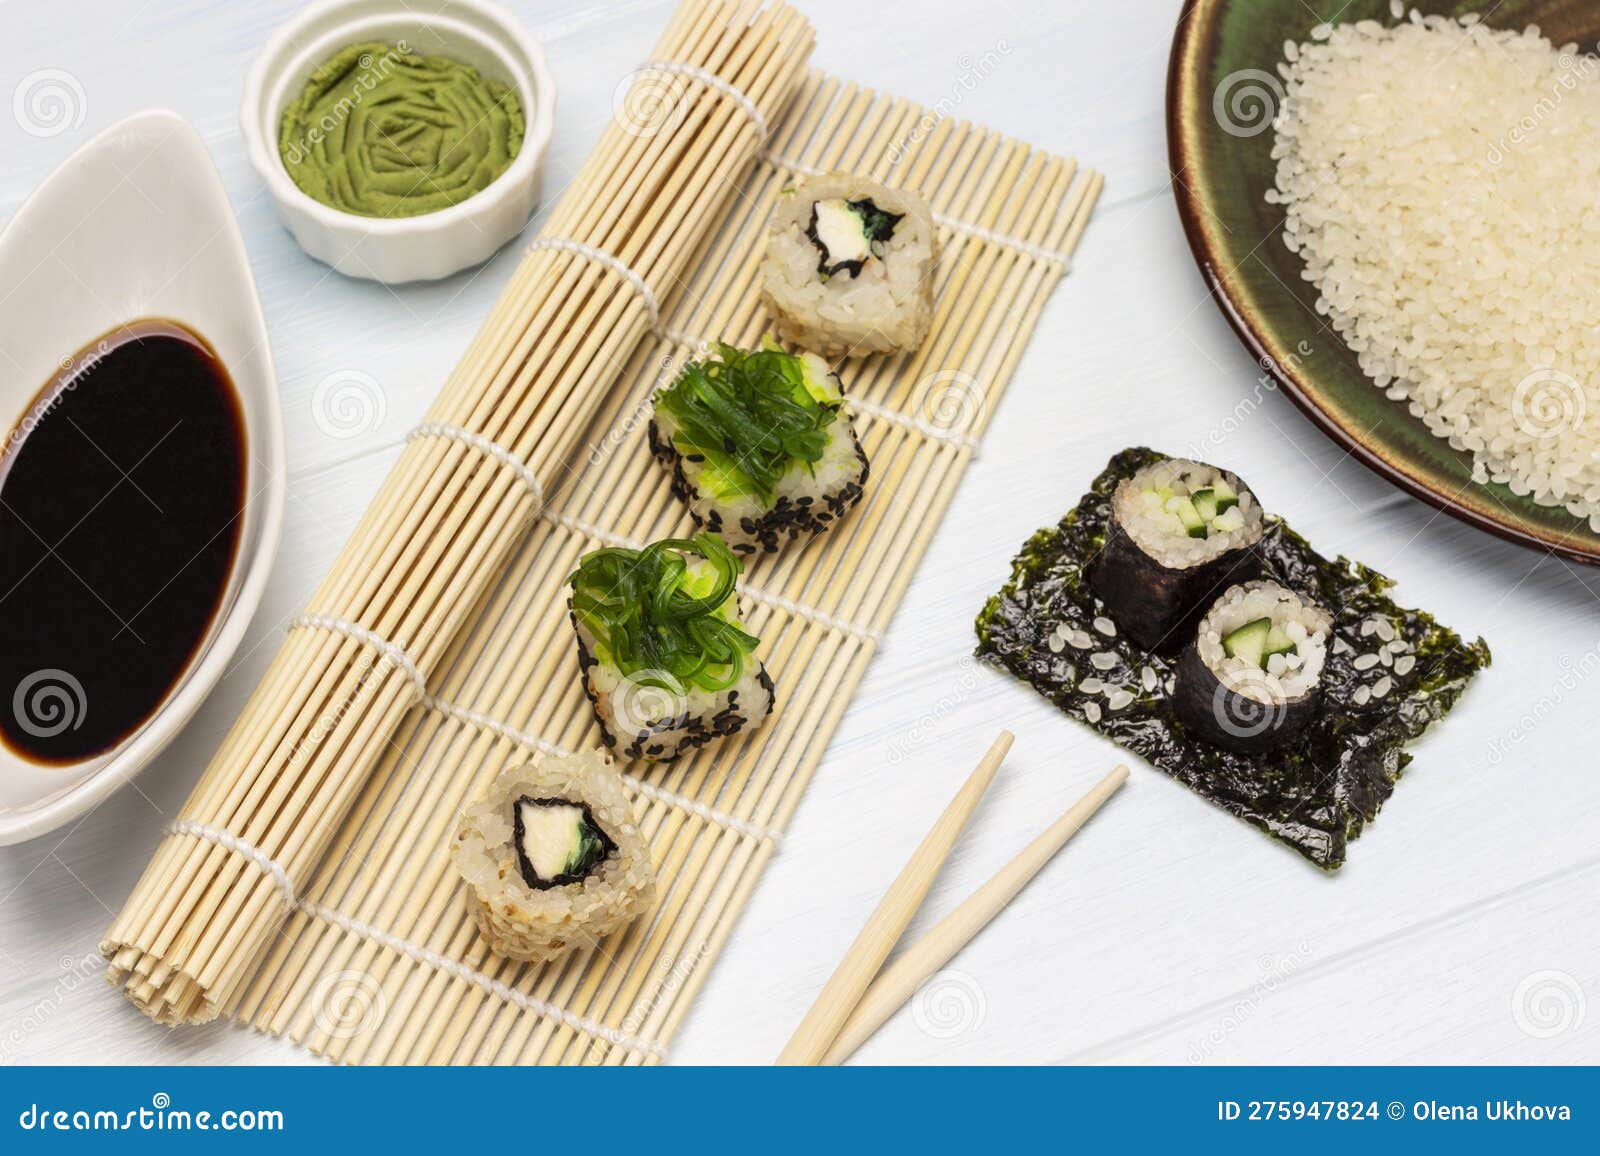 https://thumbs.dreamstime.com/z/seaweed-sushi-set-bamboo-mat-wasabi-soy-sauce-bowls-rice-plate-cucumber-nori-sheet-flat-lay-white-background-275947824.jpg